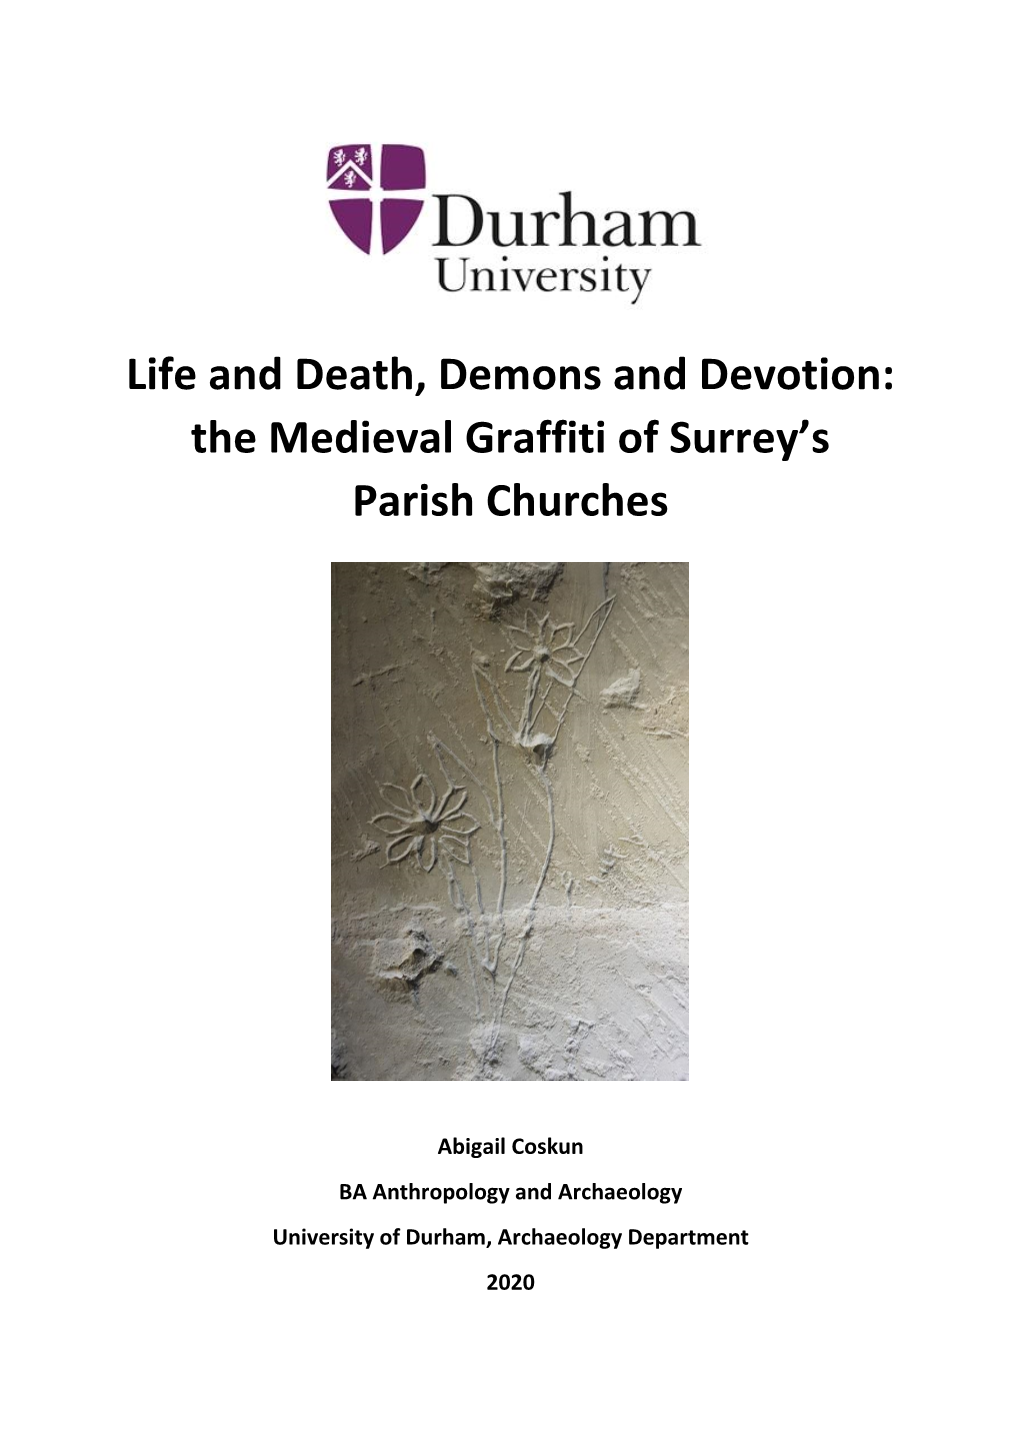 The Medieval Graffiti of Surrey's Parish Churches